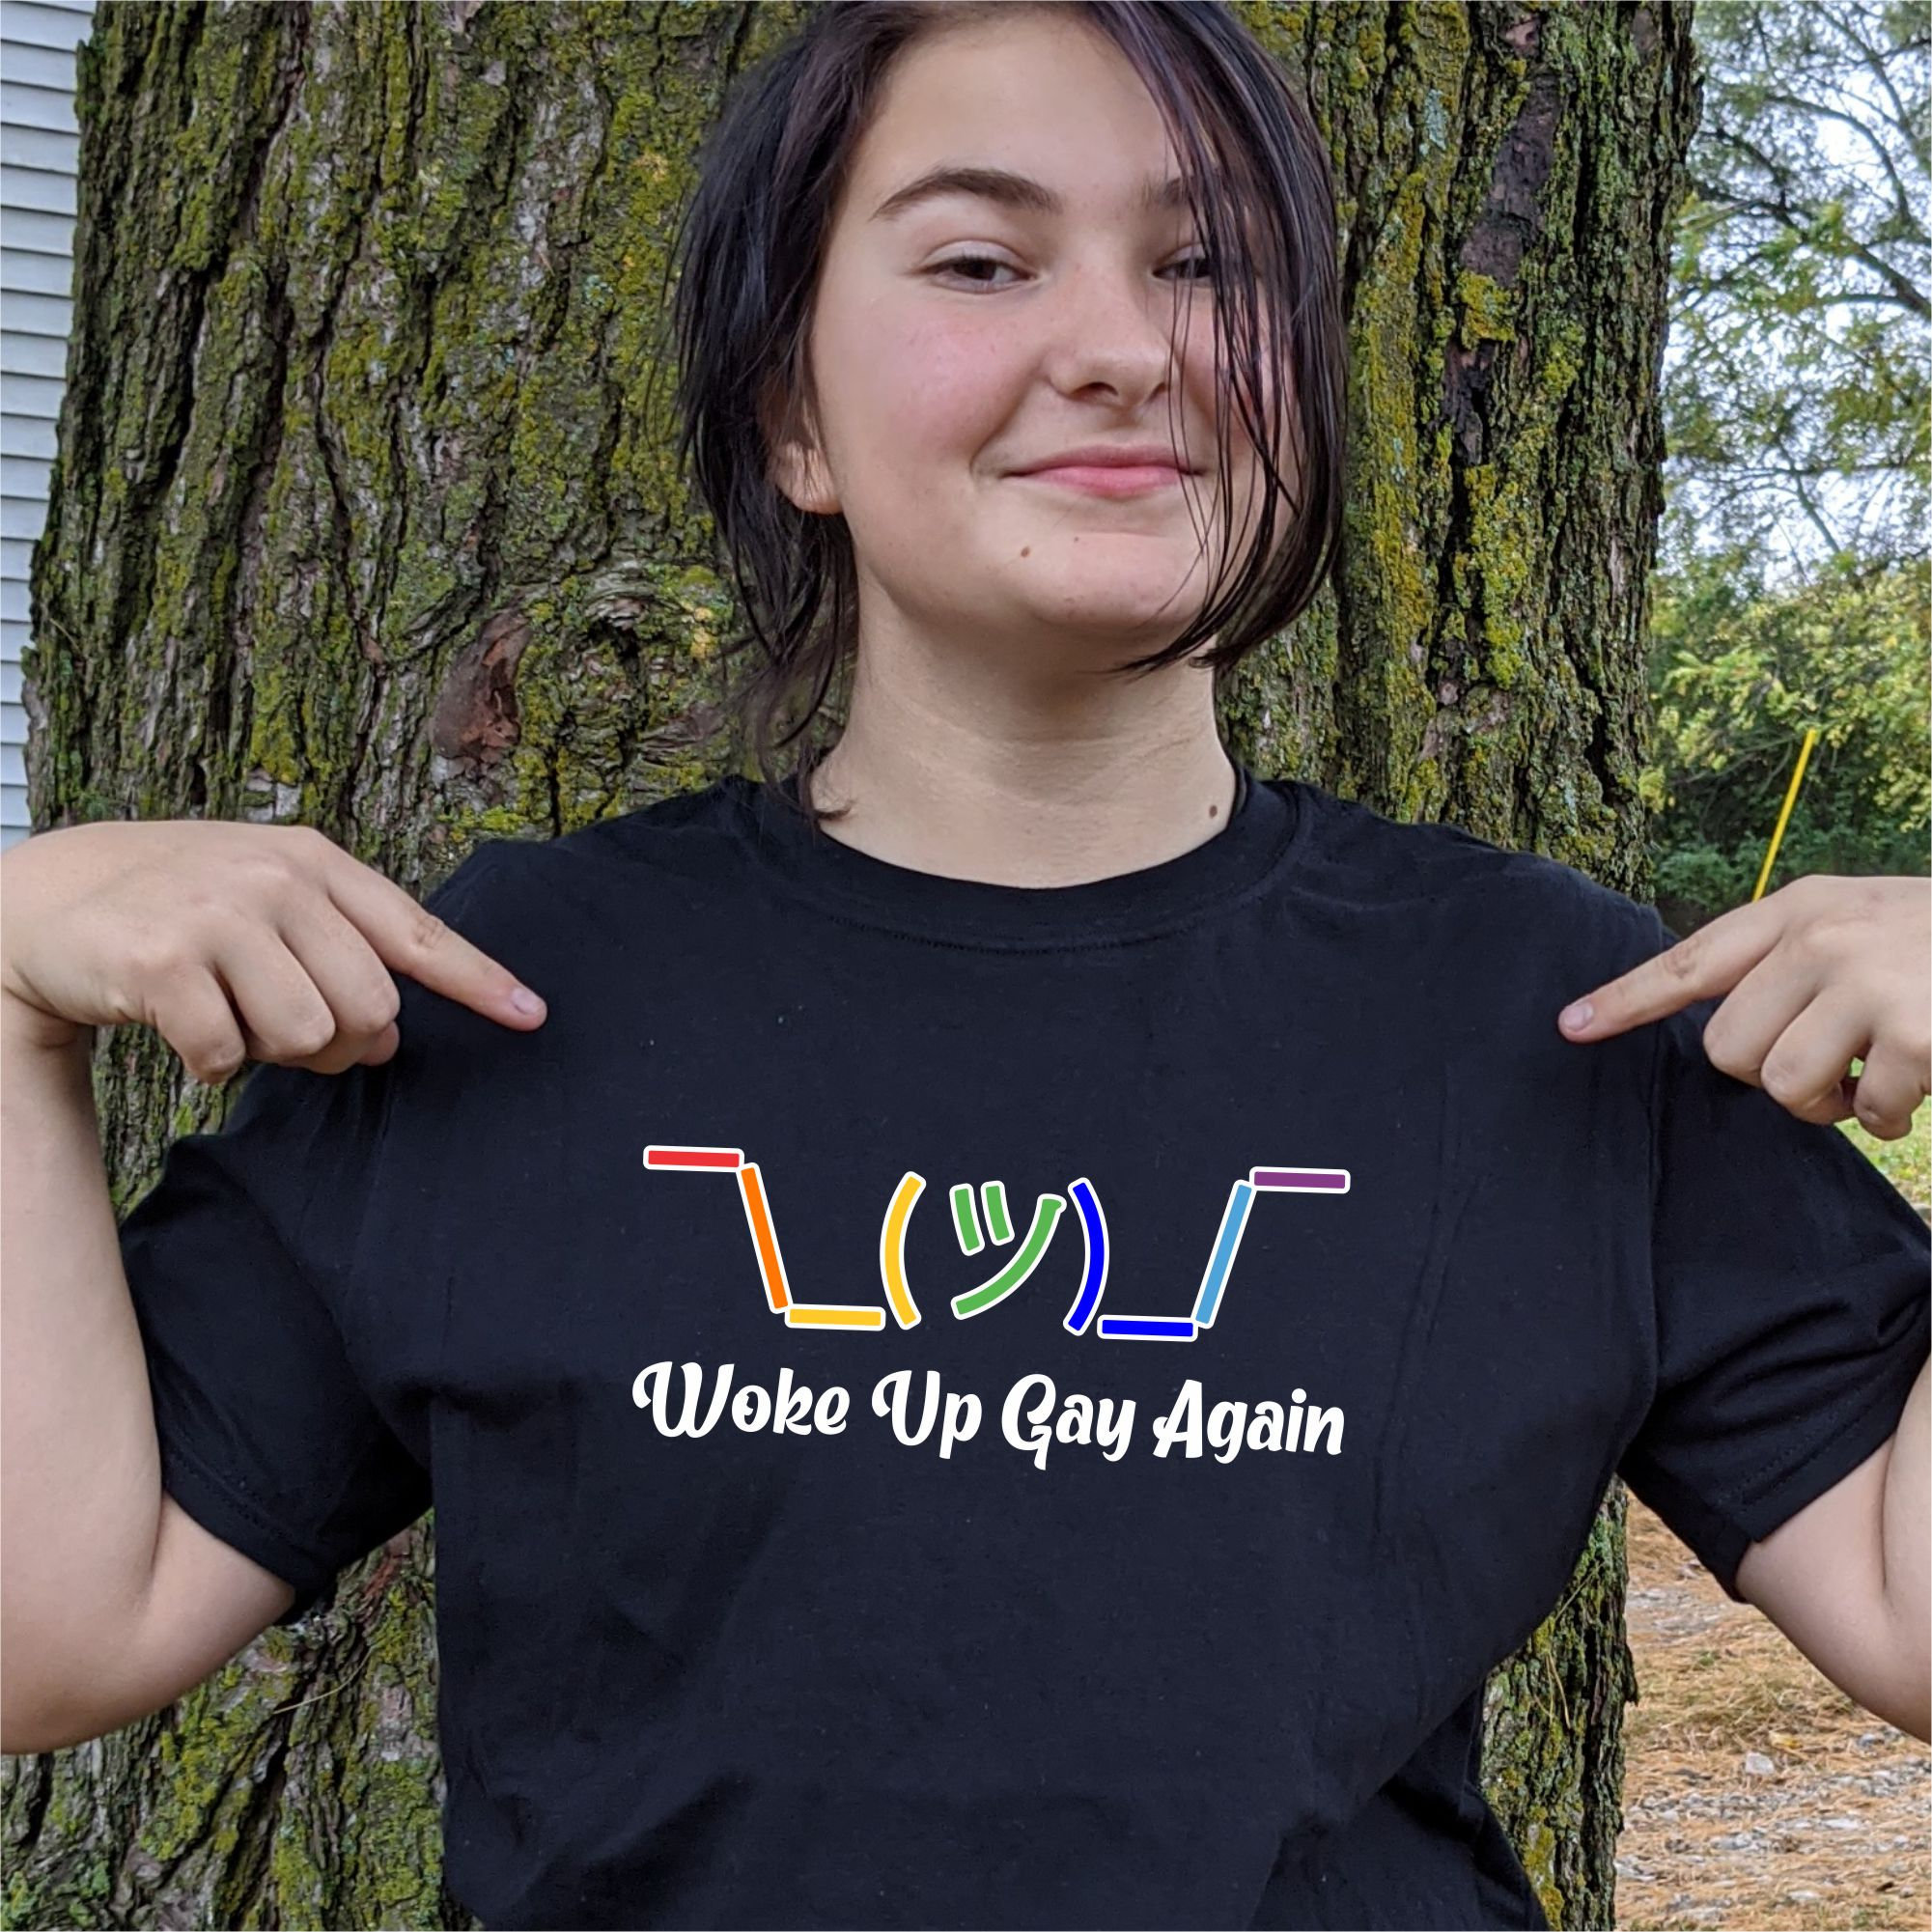 Be Proud Rainbow LGBT Pride Men's Graphic T-Shirt, Purple, 3X